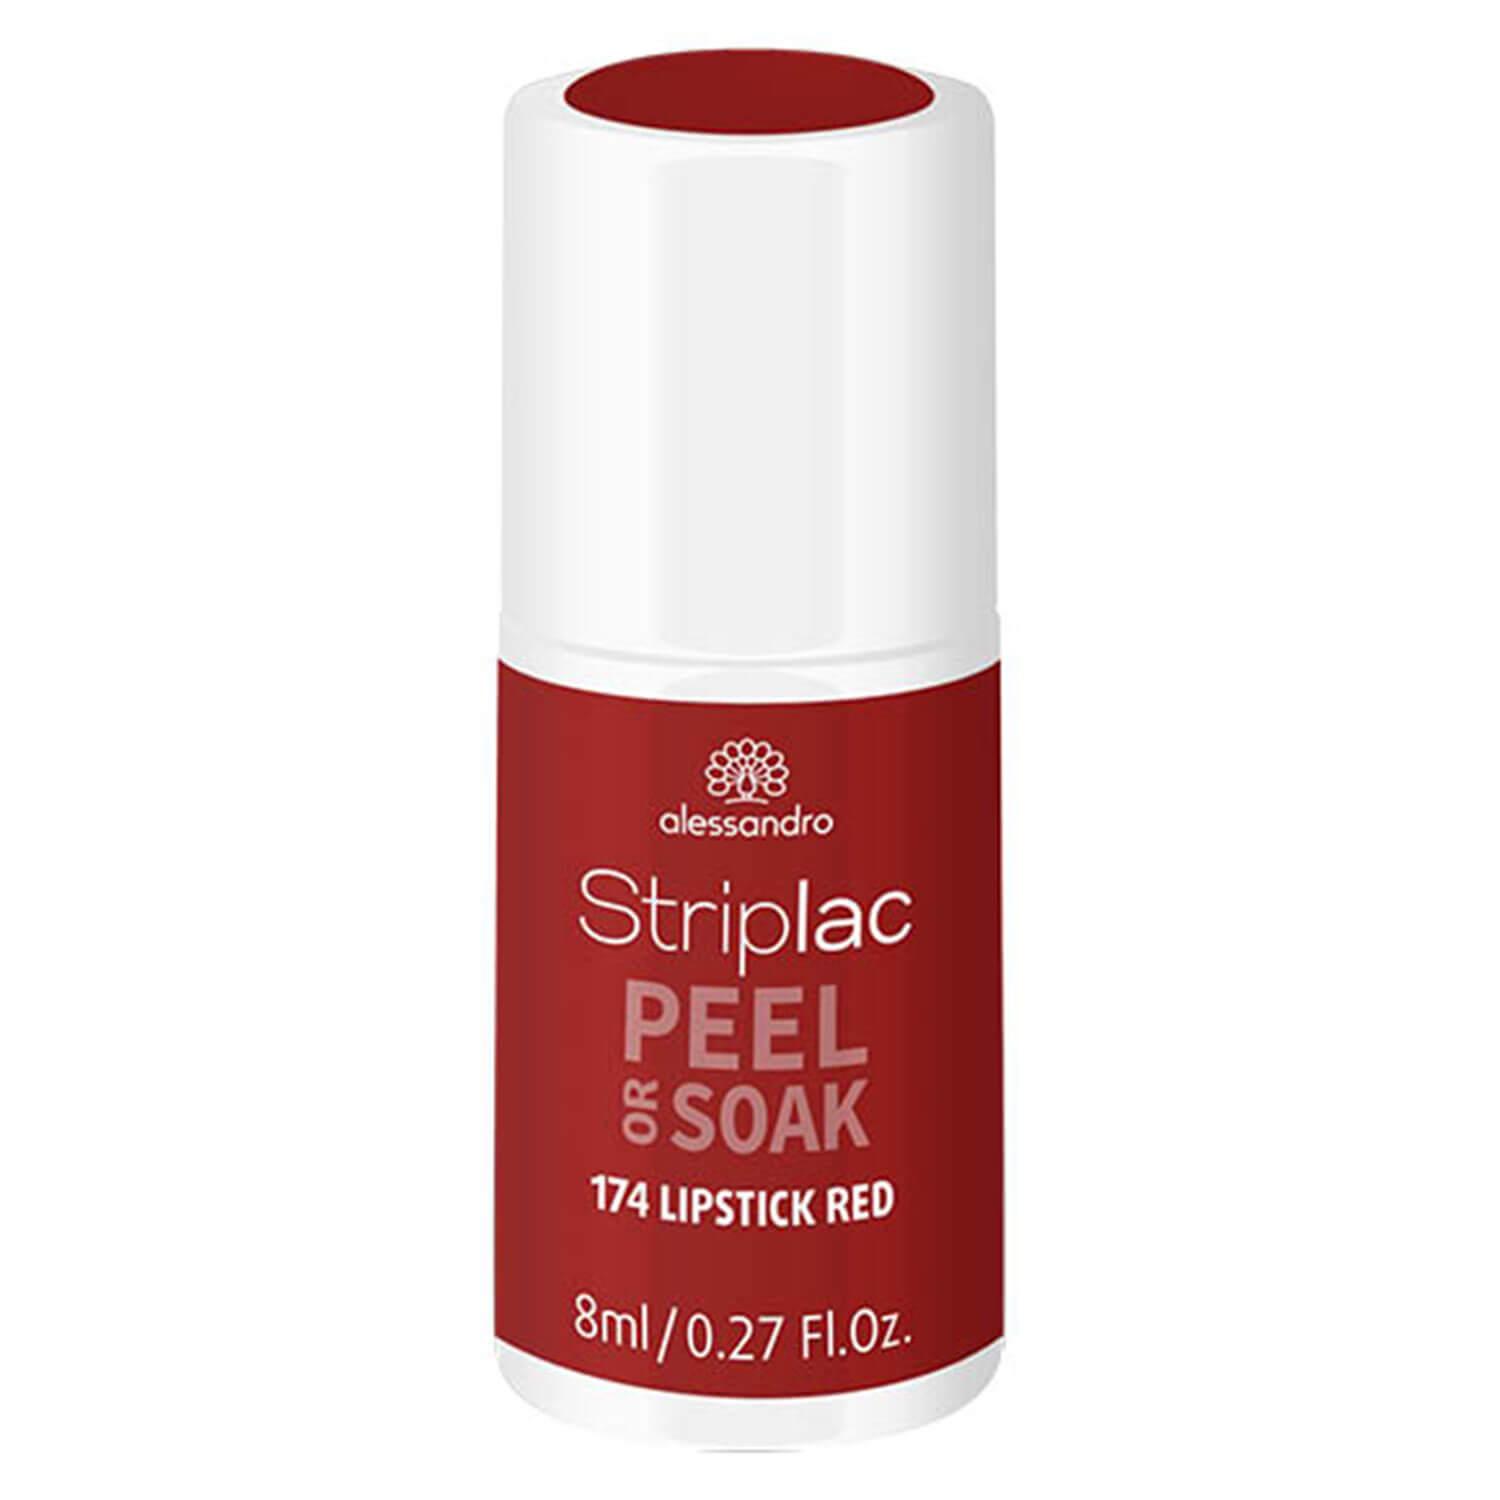 Striplac Peel or Soak - 174 Lipstick Red